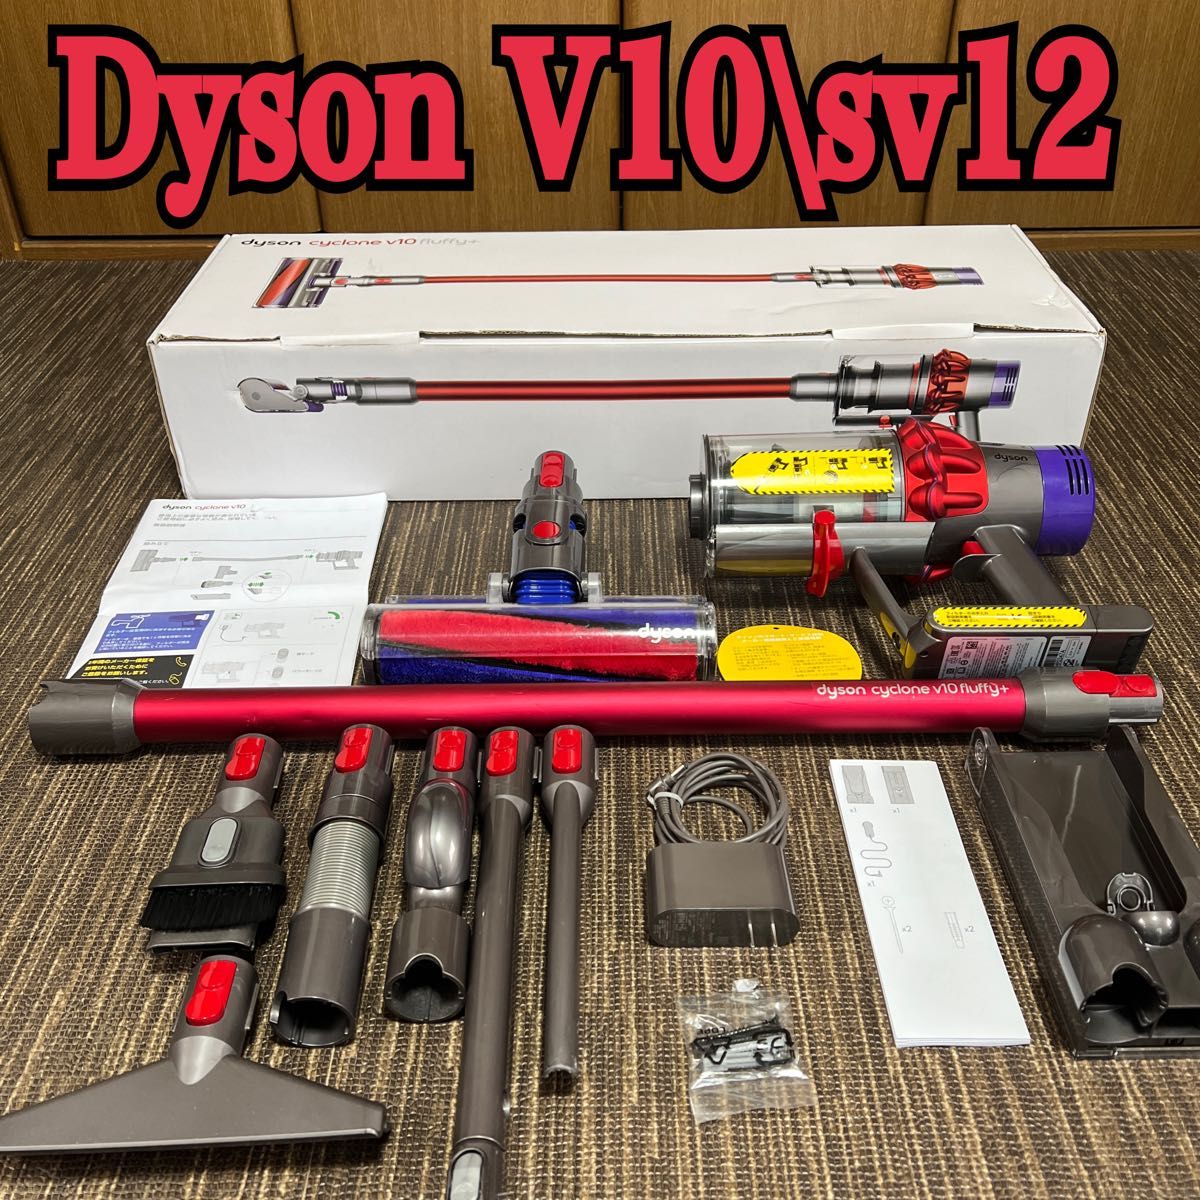 Dyson V10\sv12コードレスサイクロンクリーナー